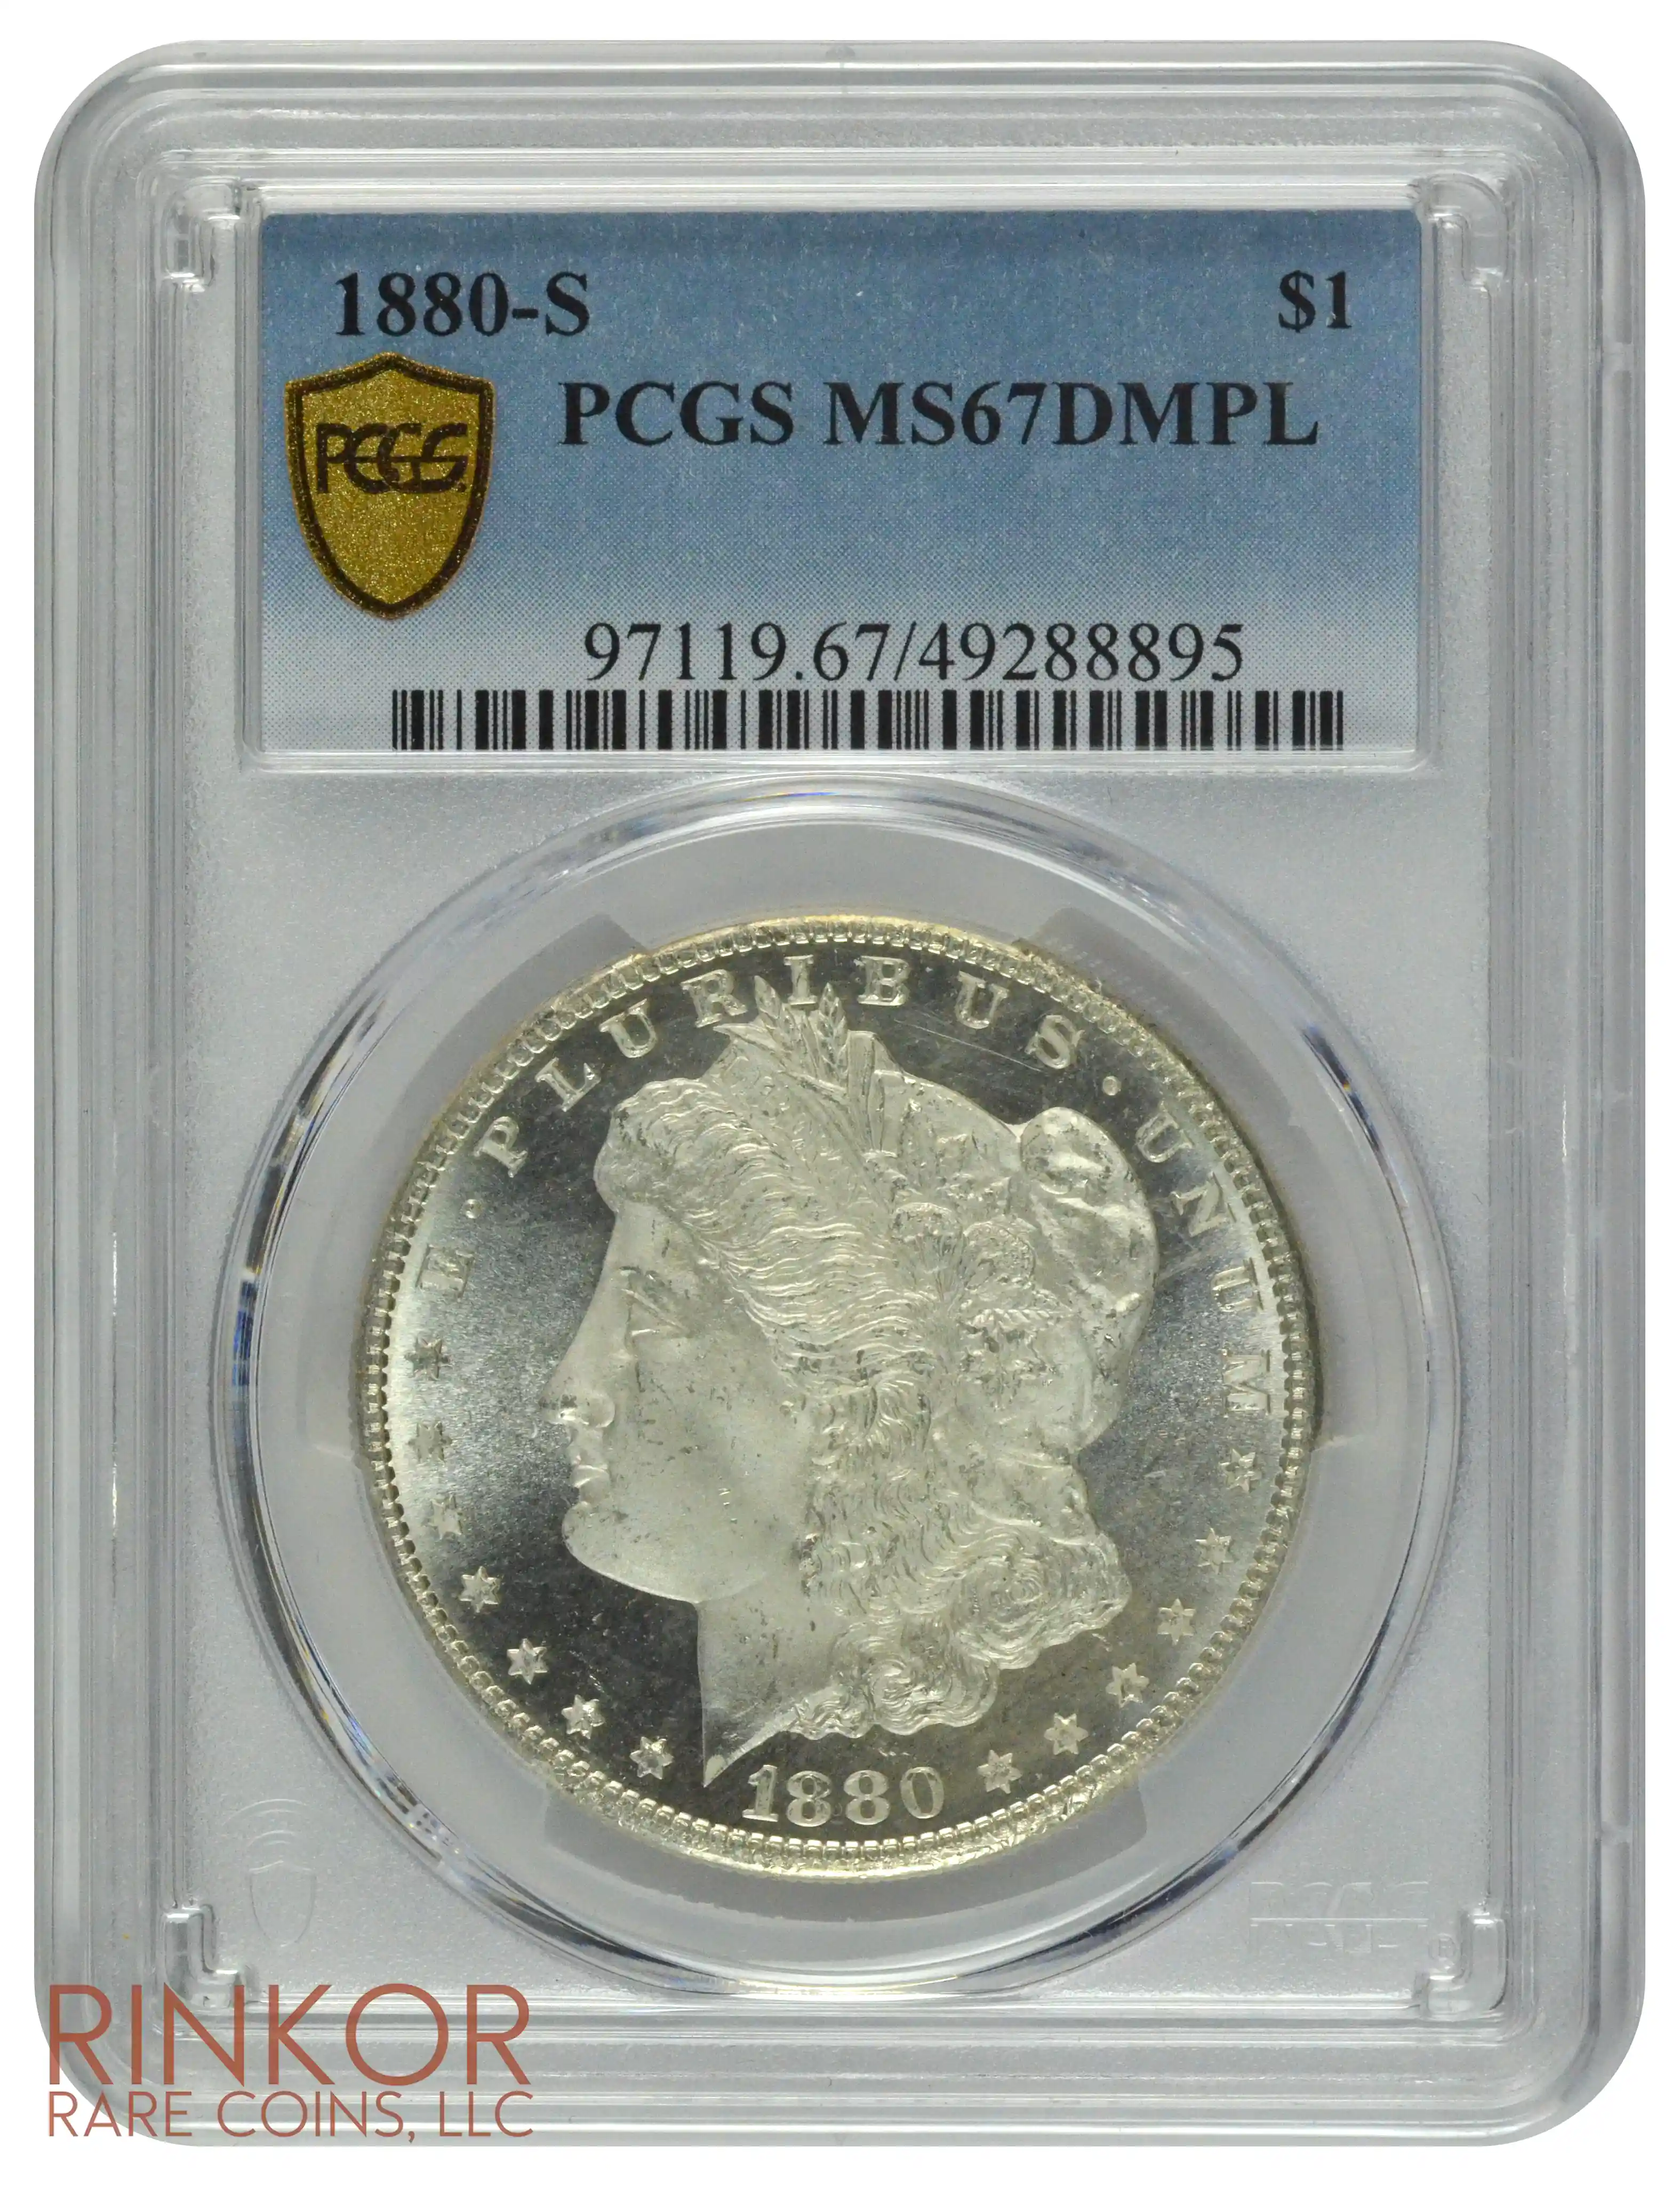 1880-S $1 PCGS MS 67 DMPL